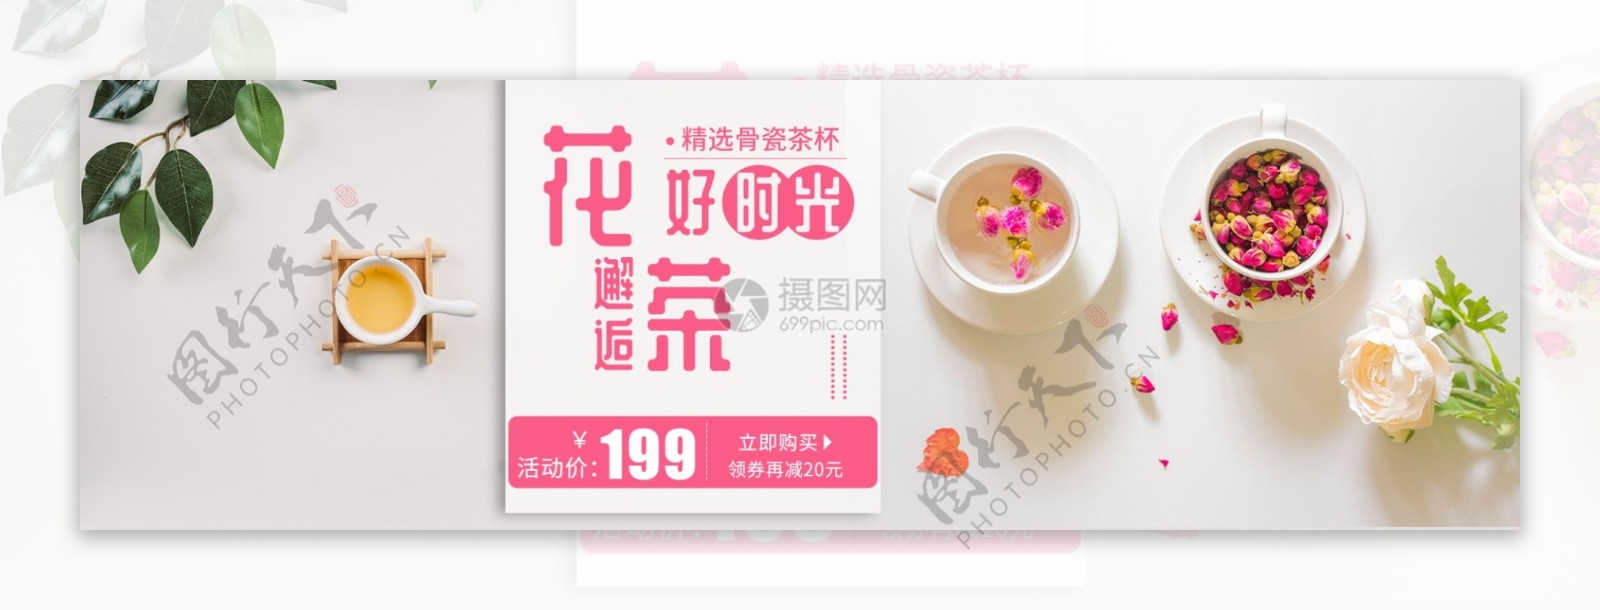 茶杯电商淘宝banner